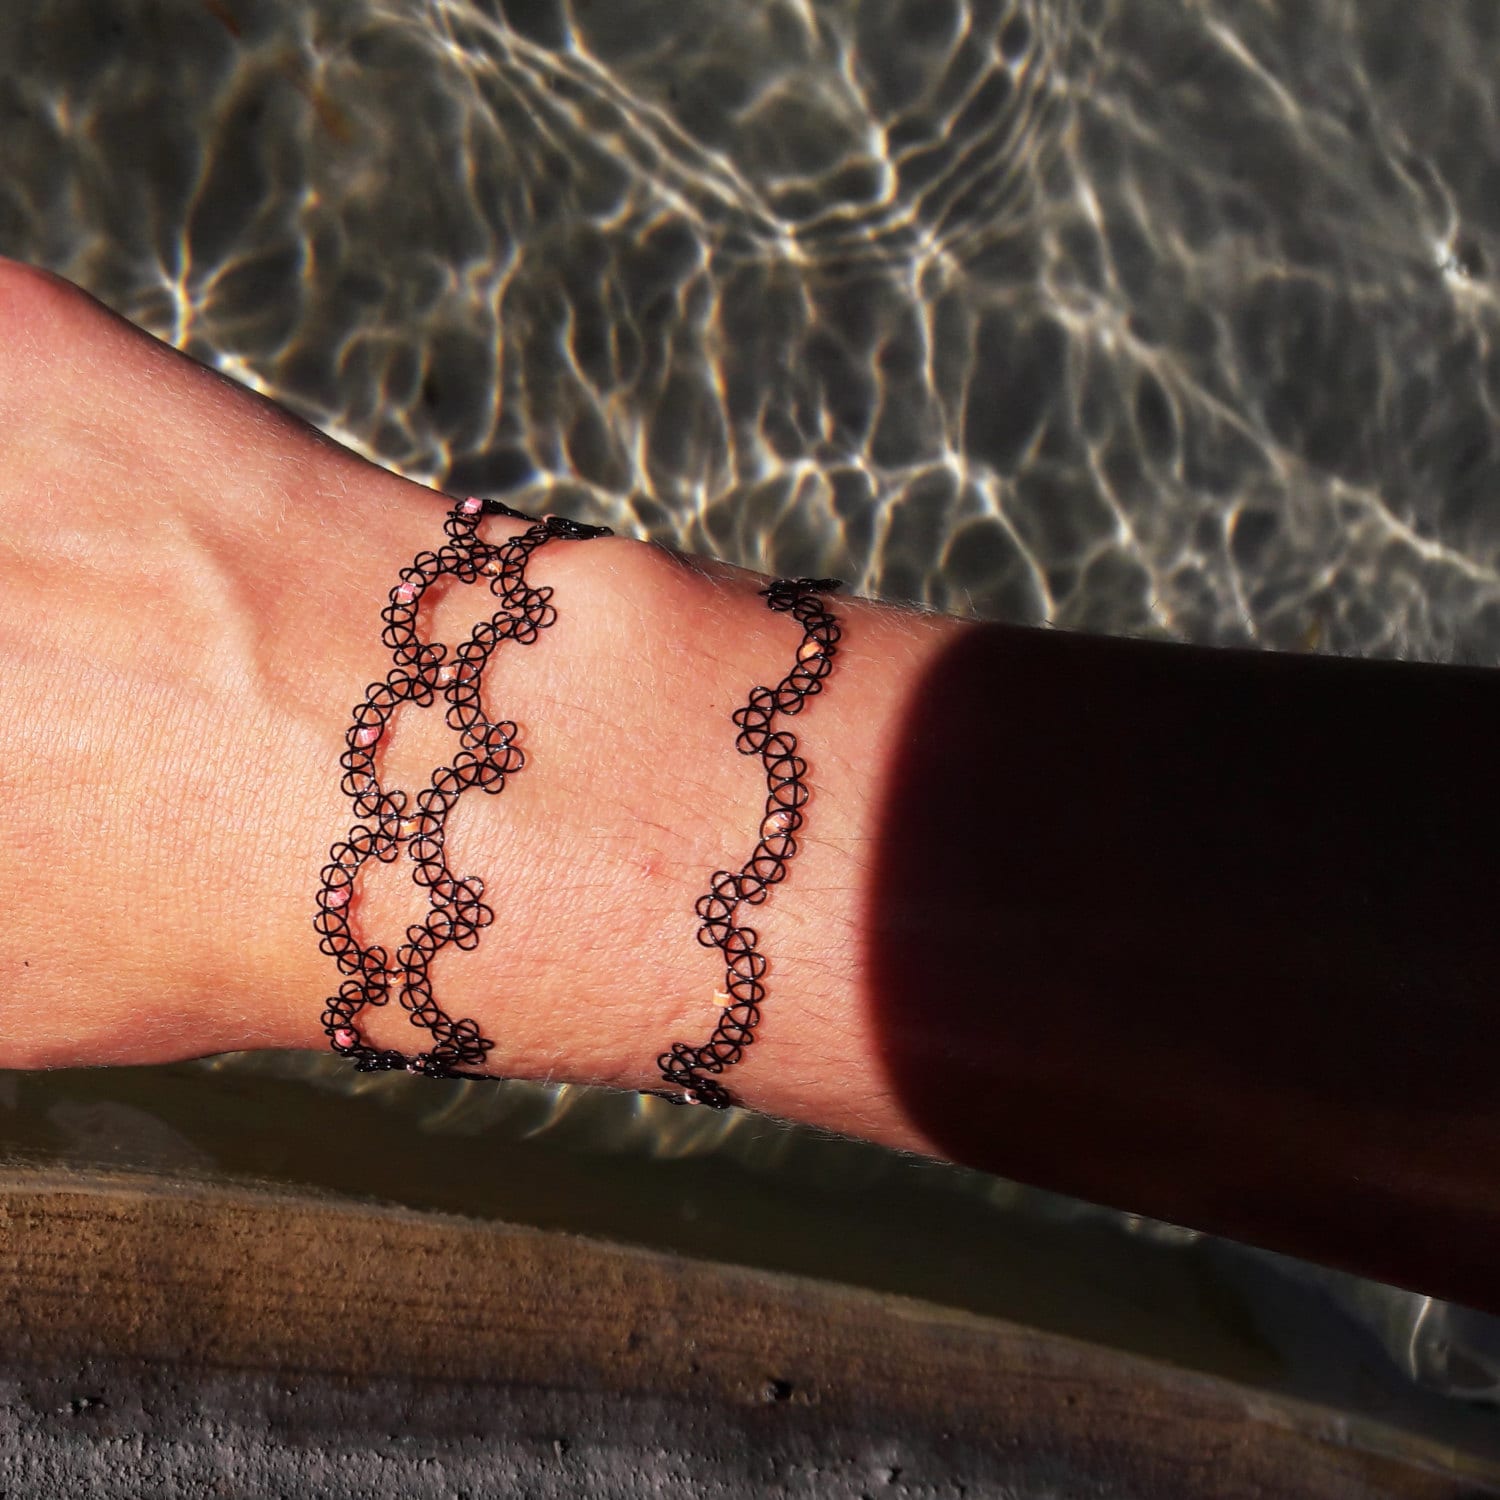 21 Bracelet Tattoo Ideas That Look Like Jewelry - StayGlam | Tattoo bracelet,  Wrist bracelet tattoo, Black and white flower tattoo